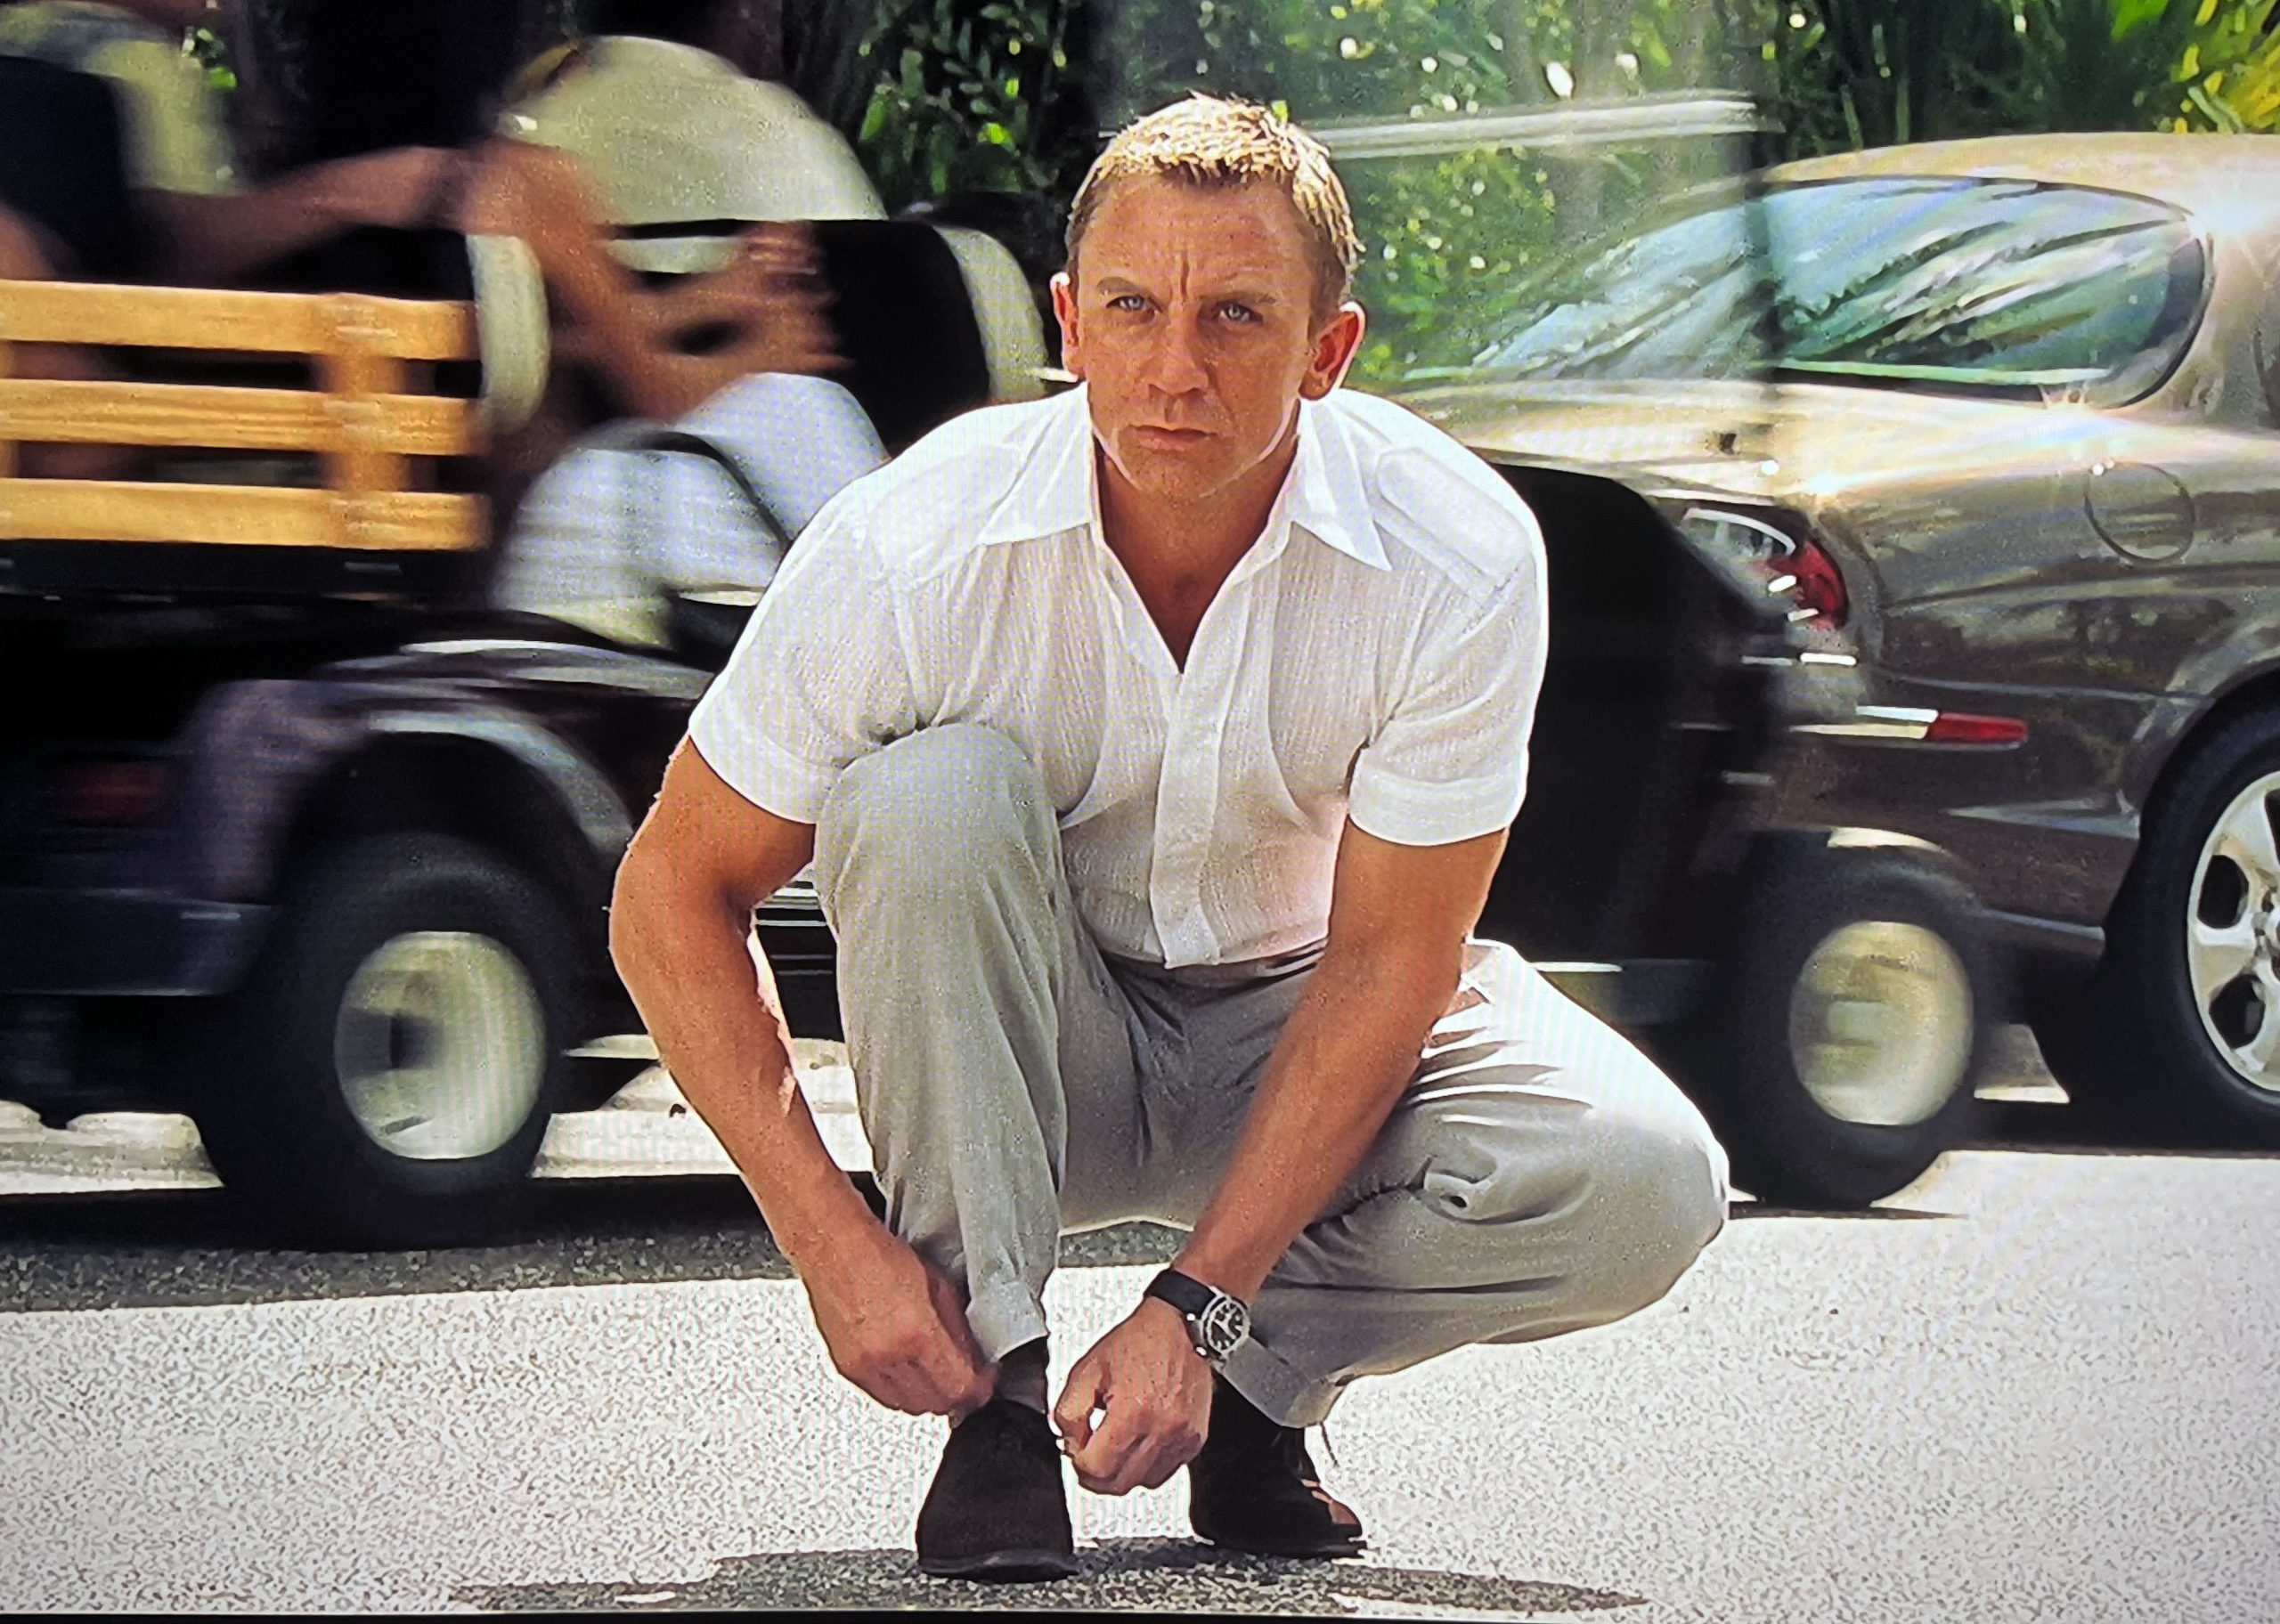 Daniel Craig's Physique looks good in shirt doing up shoe laces